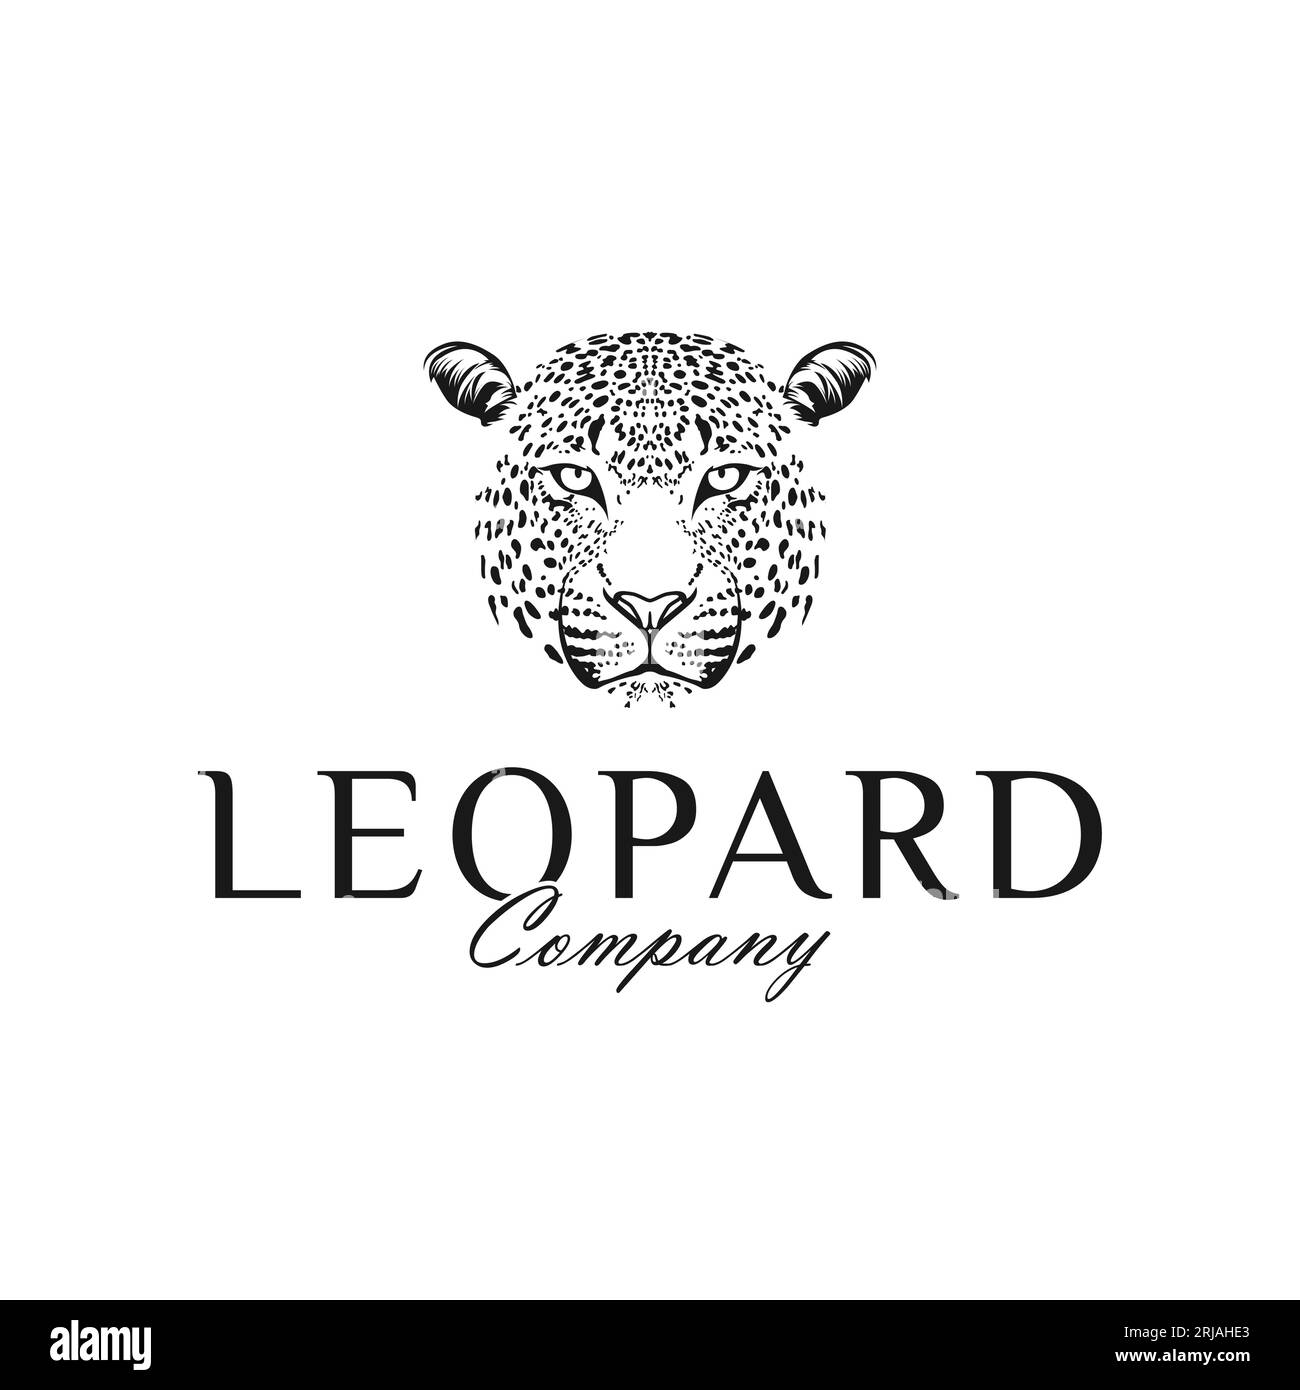 Leopard Cheetah Face Logo Design Inspiration Stock Vector